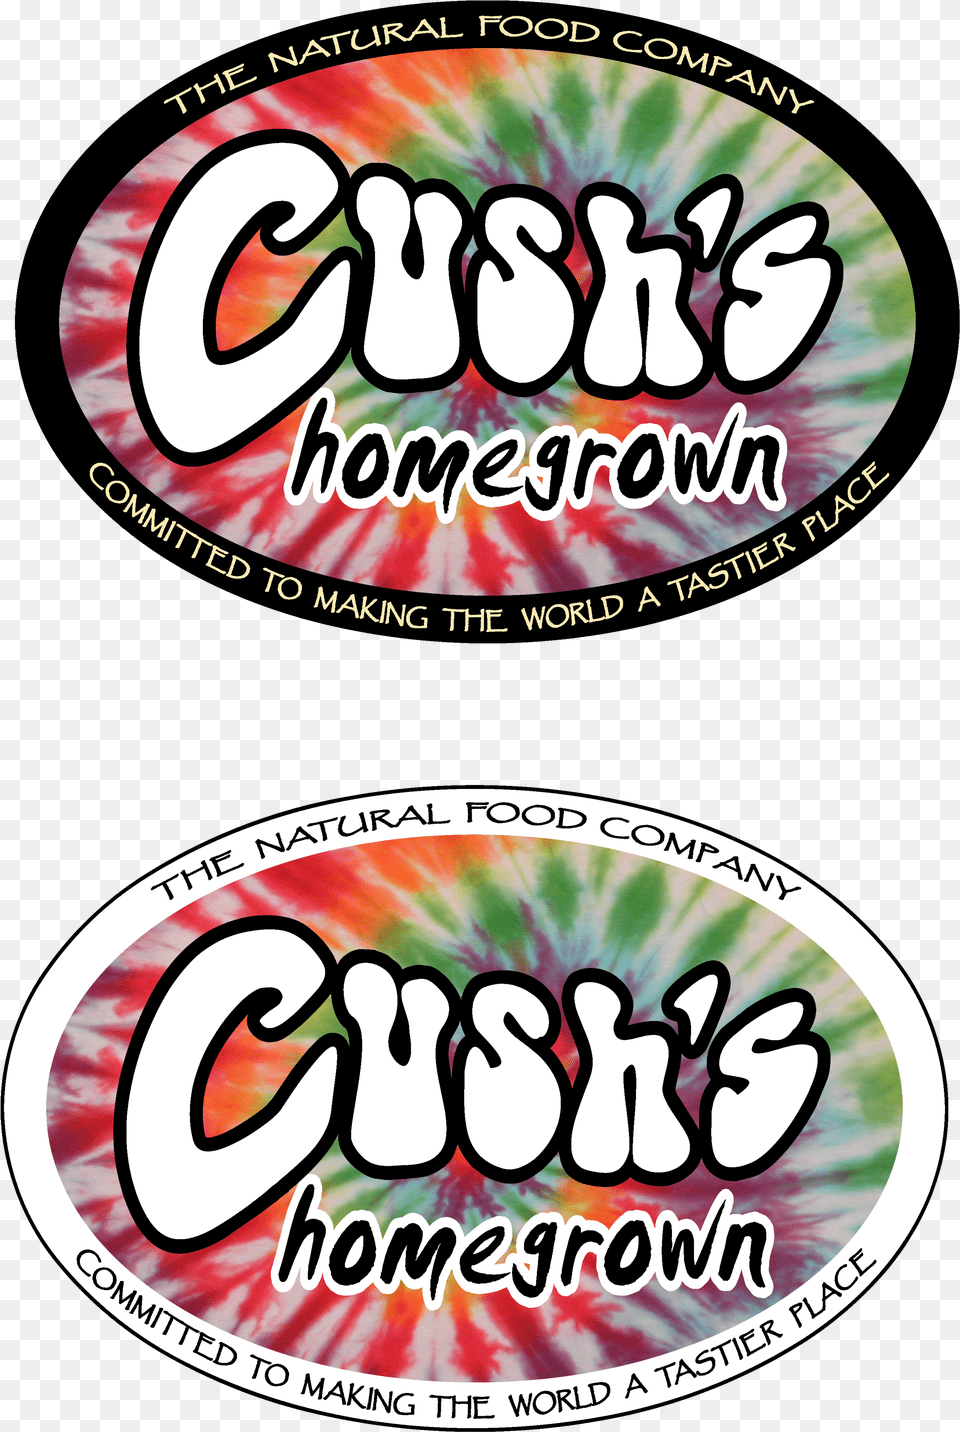 Cushs Homegrown Oval Logos 2013 No Clip Art, Book, Comics, Publication, Adult Free Png Download